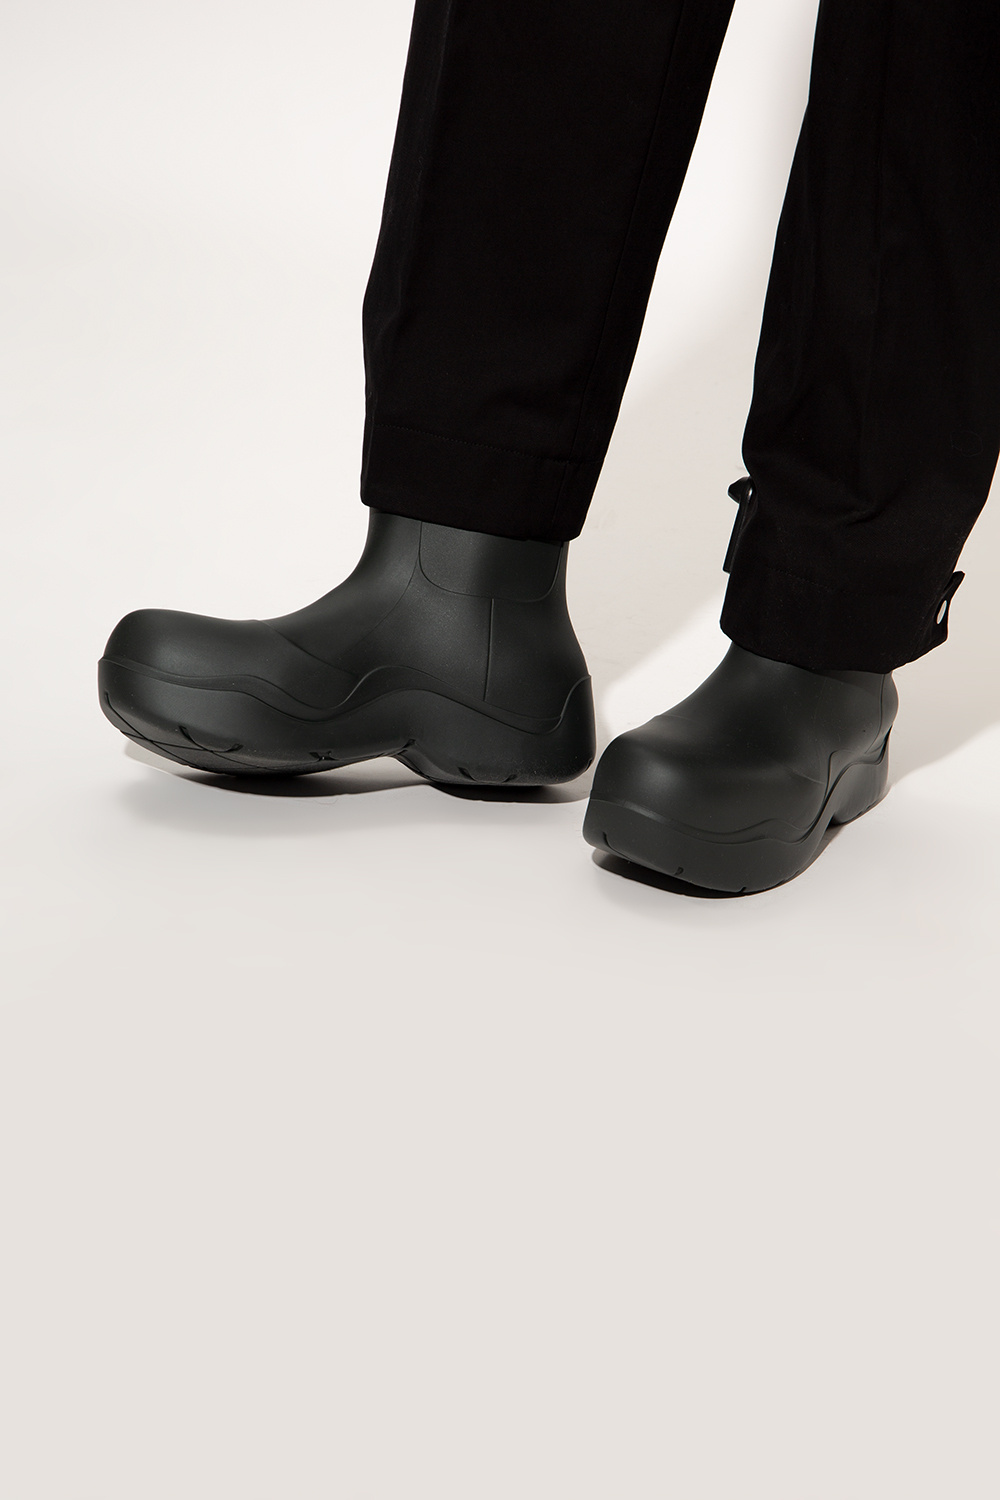 bottega Acetate Veneta ‘Puddle’ short rain boots